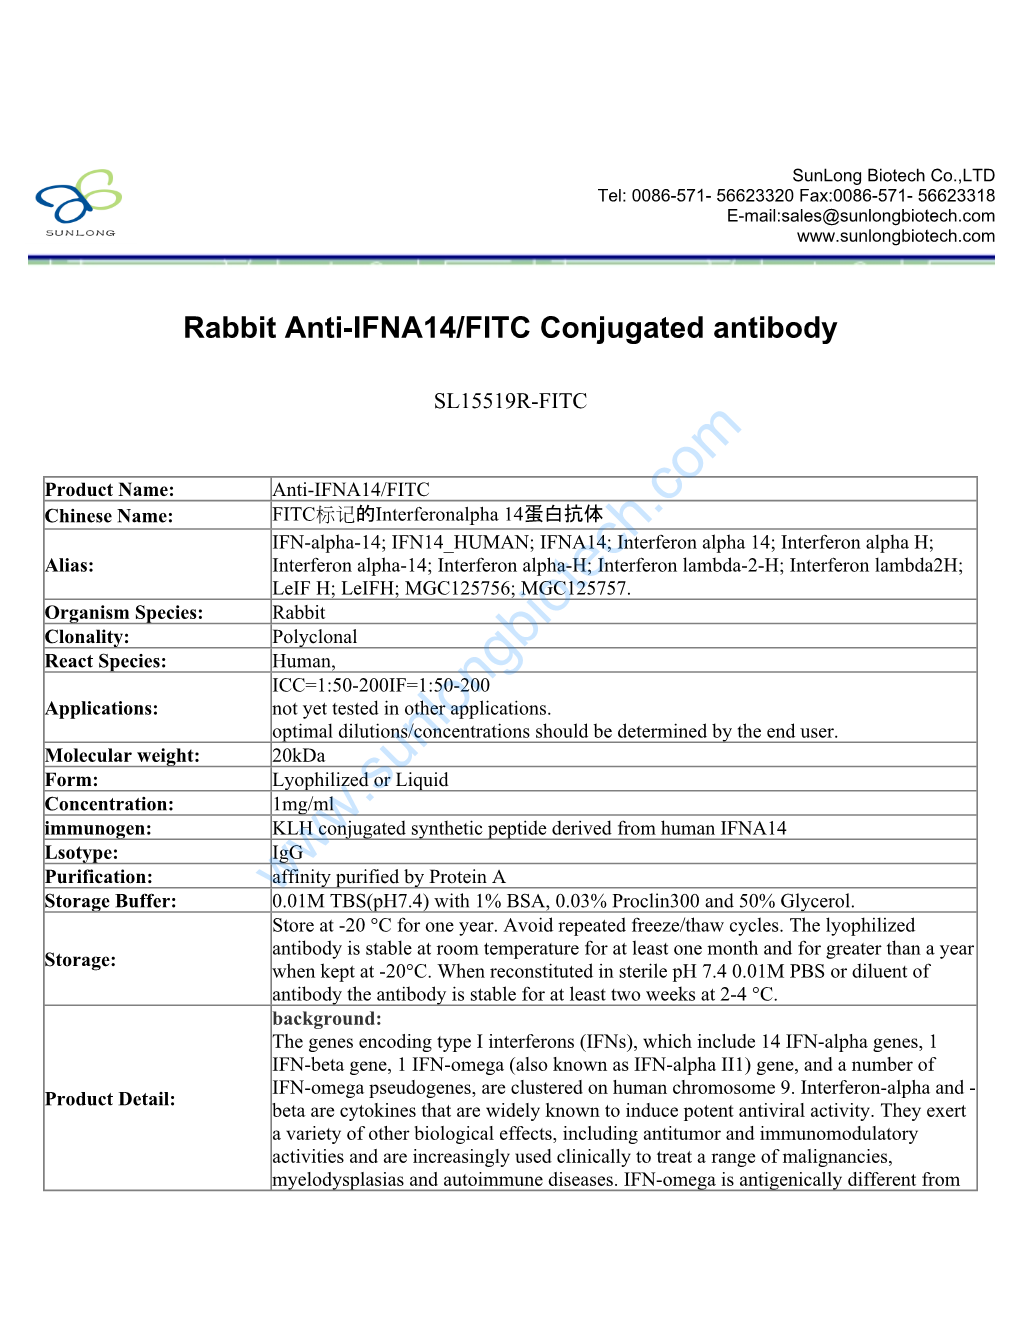 Rabbit Anti-IFNA14/FITC Conjugated Antibody-SL15519R-FITC